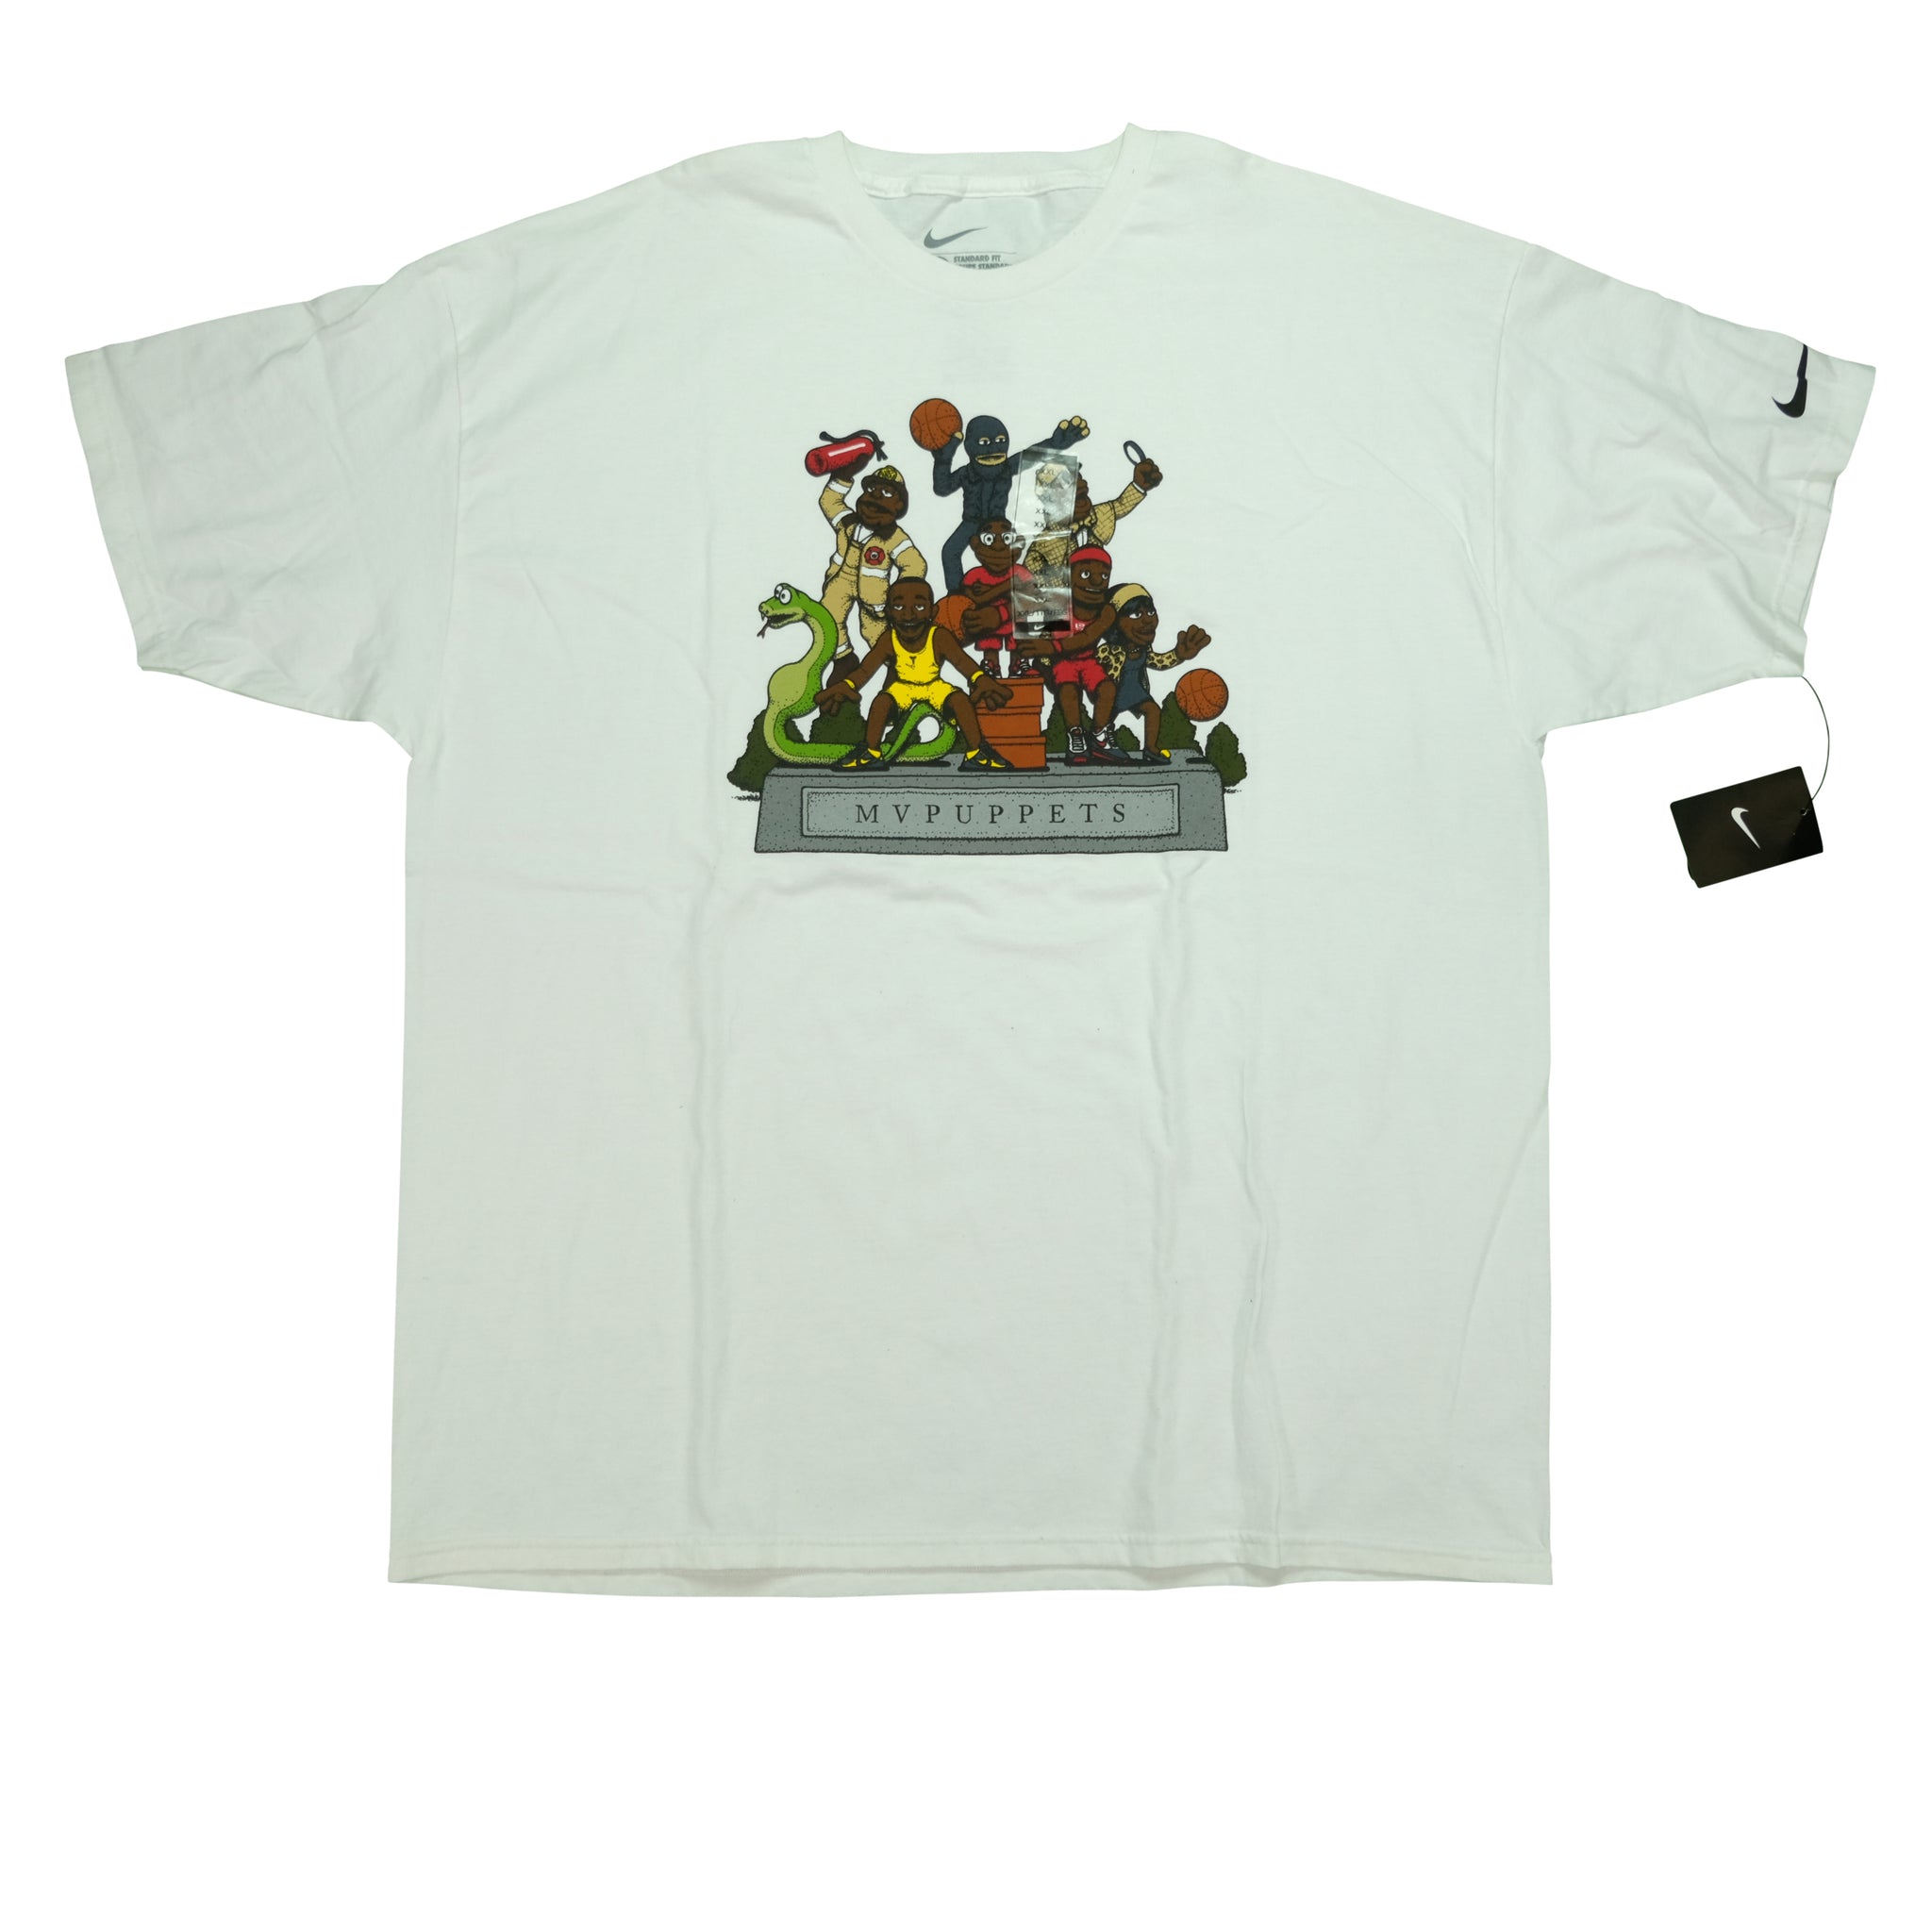 Kobe bryant 90s style vintage tee t-shirt